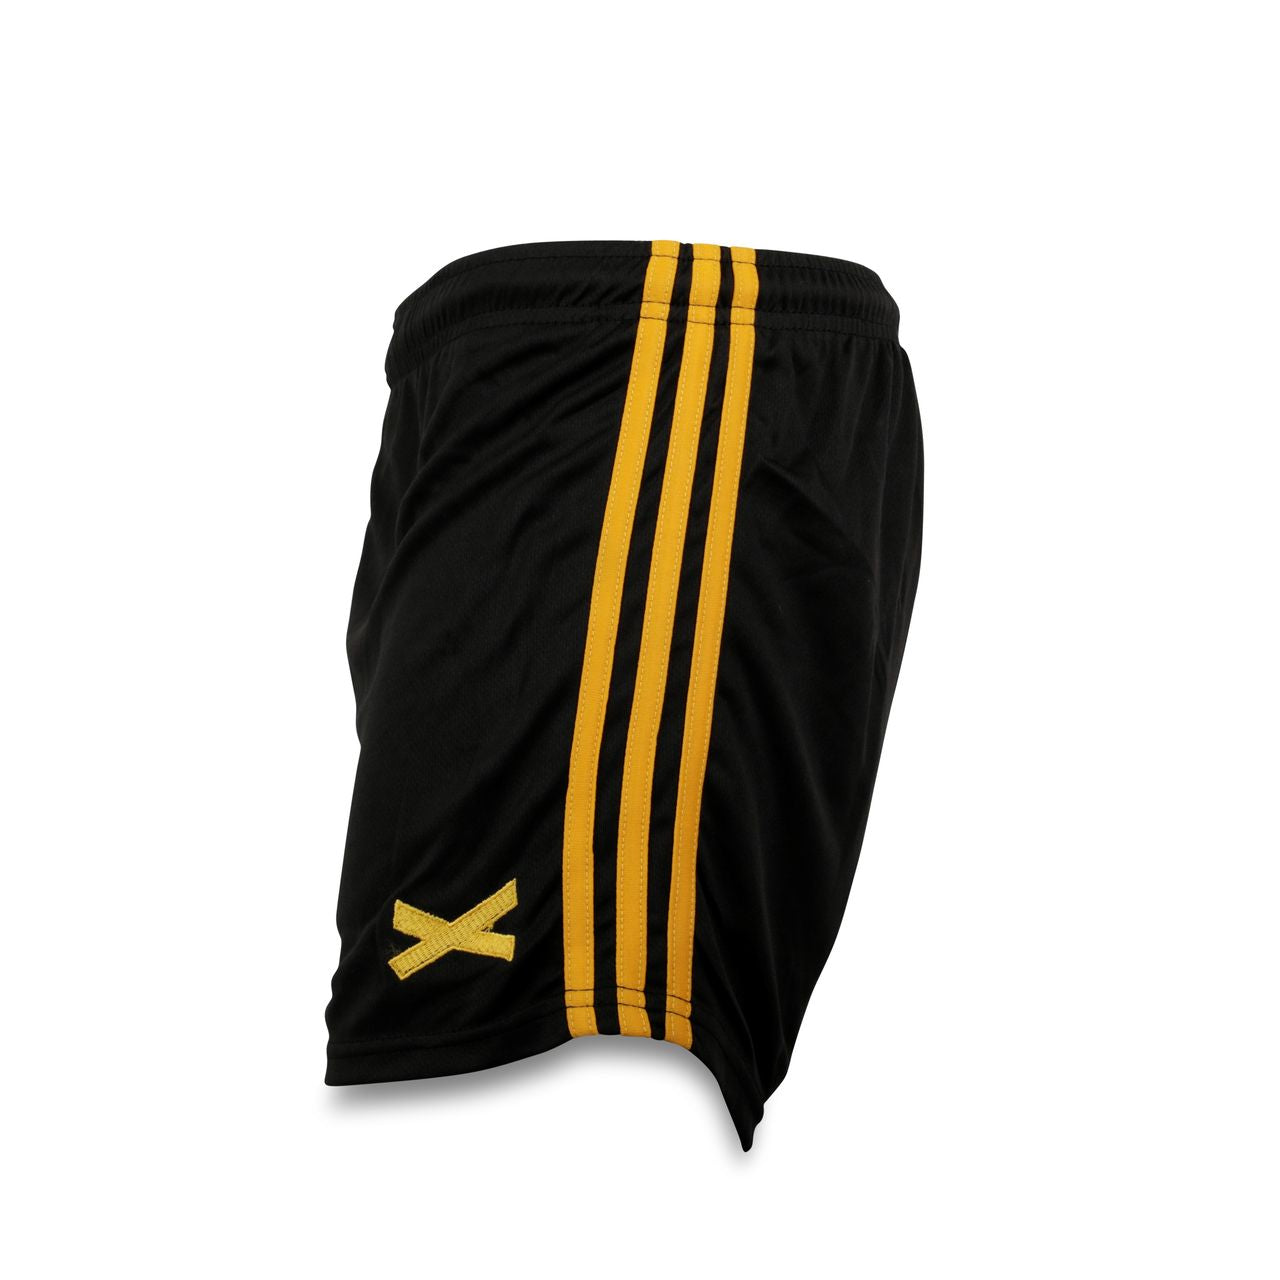 GAA Shorts Black with Amber Stripes Gaelic Games Sportswear